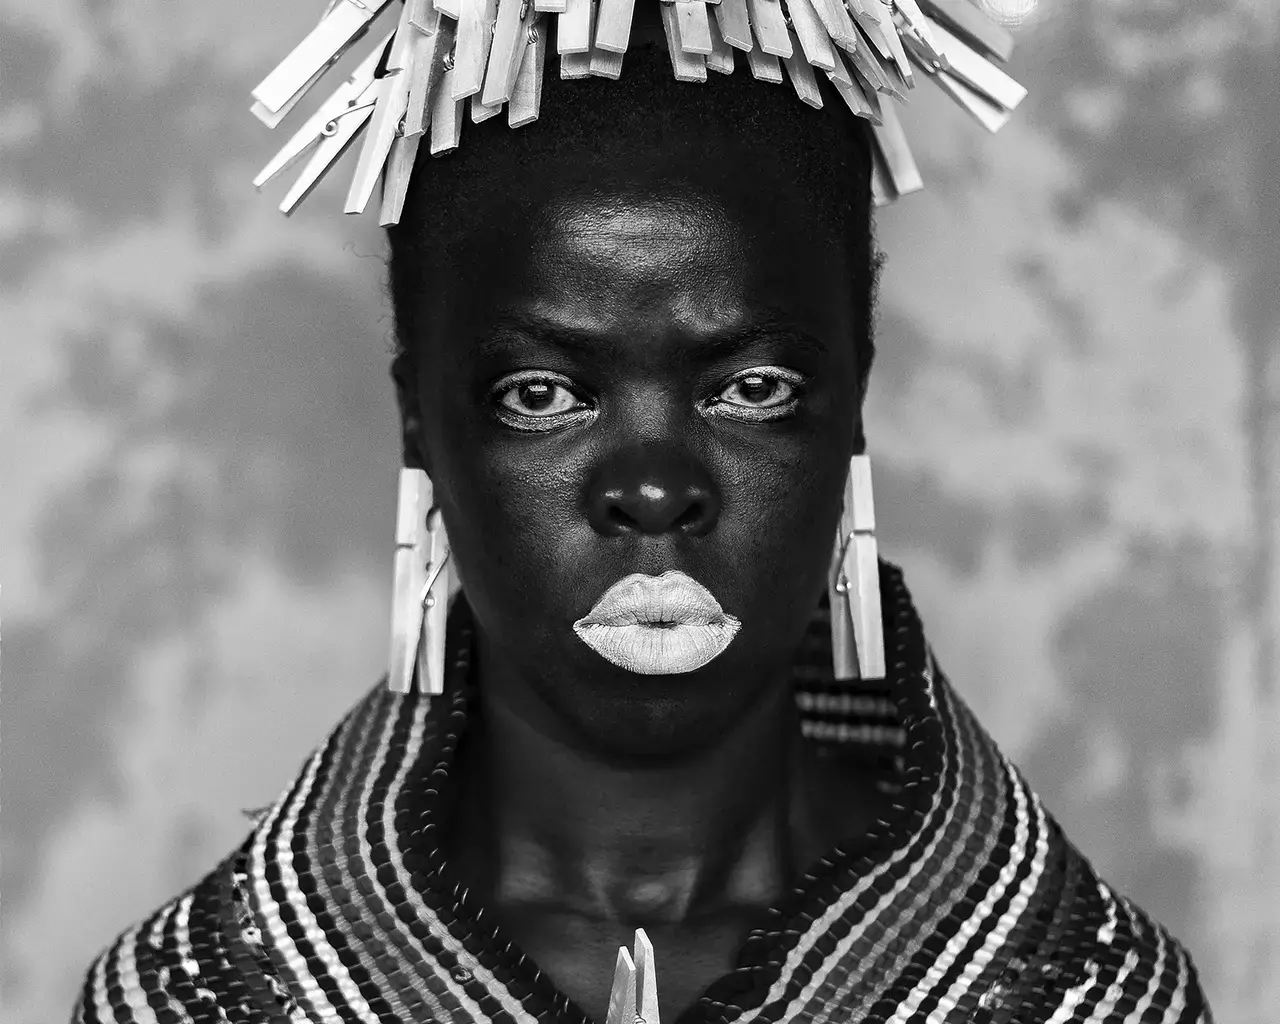 Zanele Muholi, Bester I, 2015, self portrait, Mayotte. Photo courtesy of the artist.